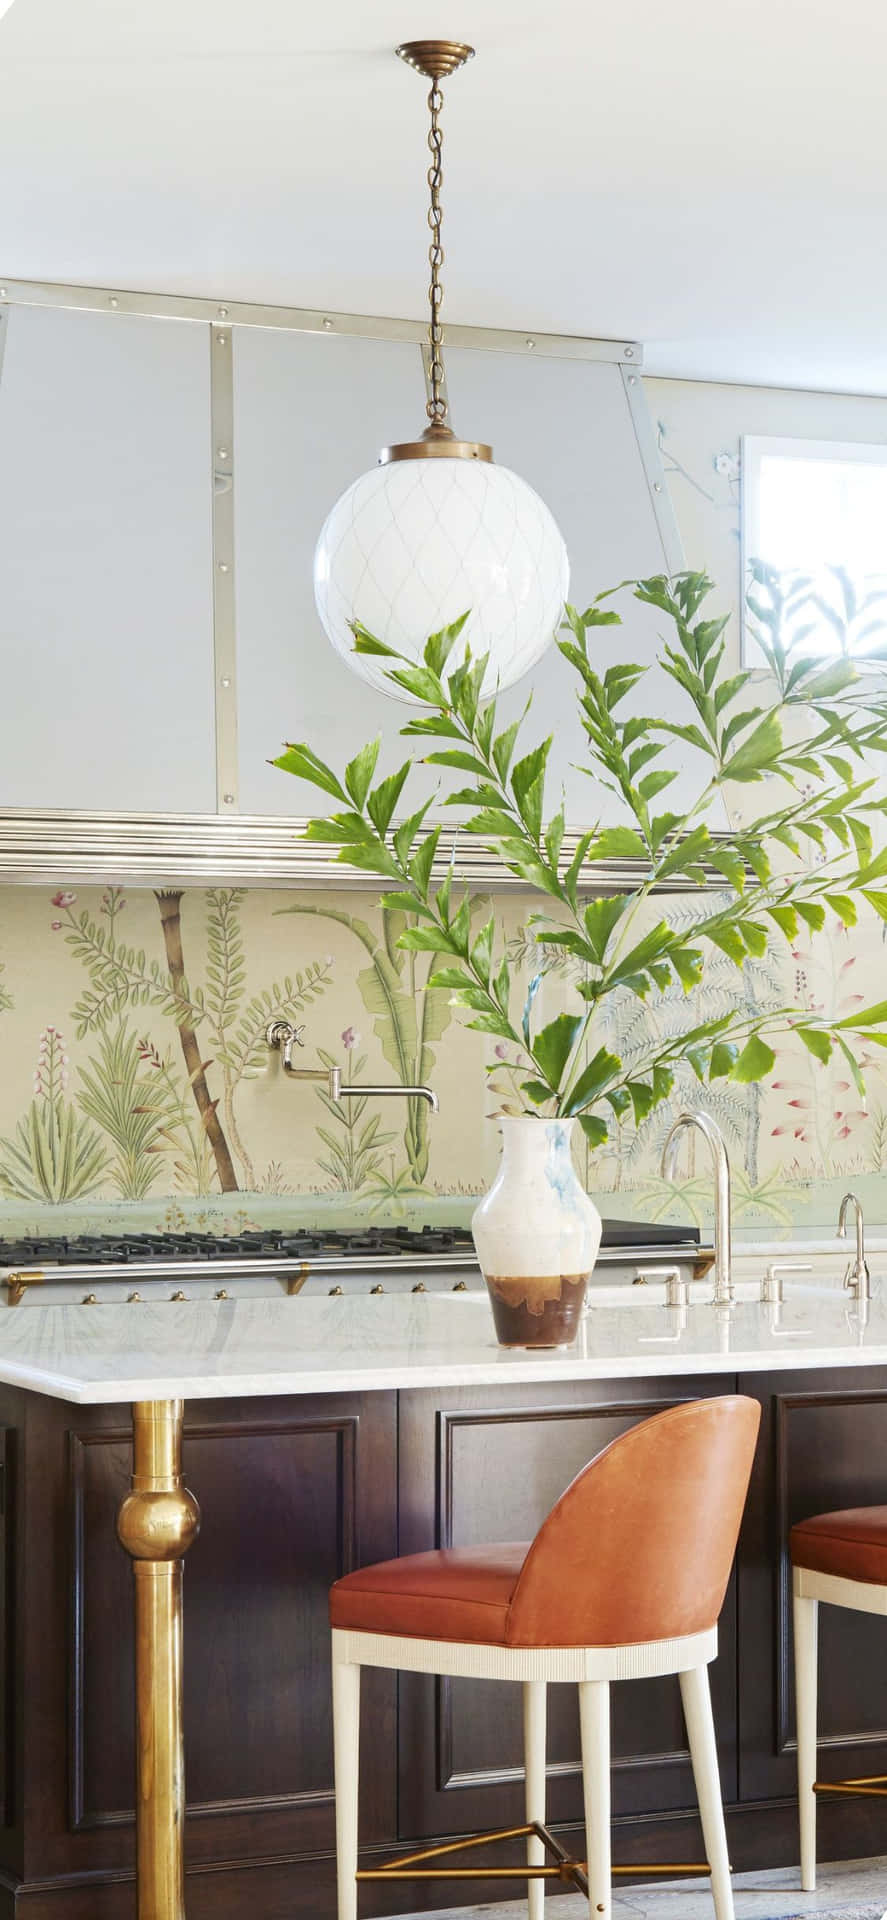 Plant In Vase Iphone X Kitchen Background